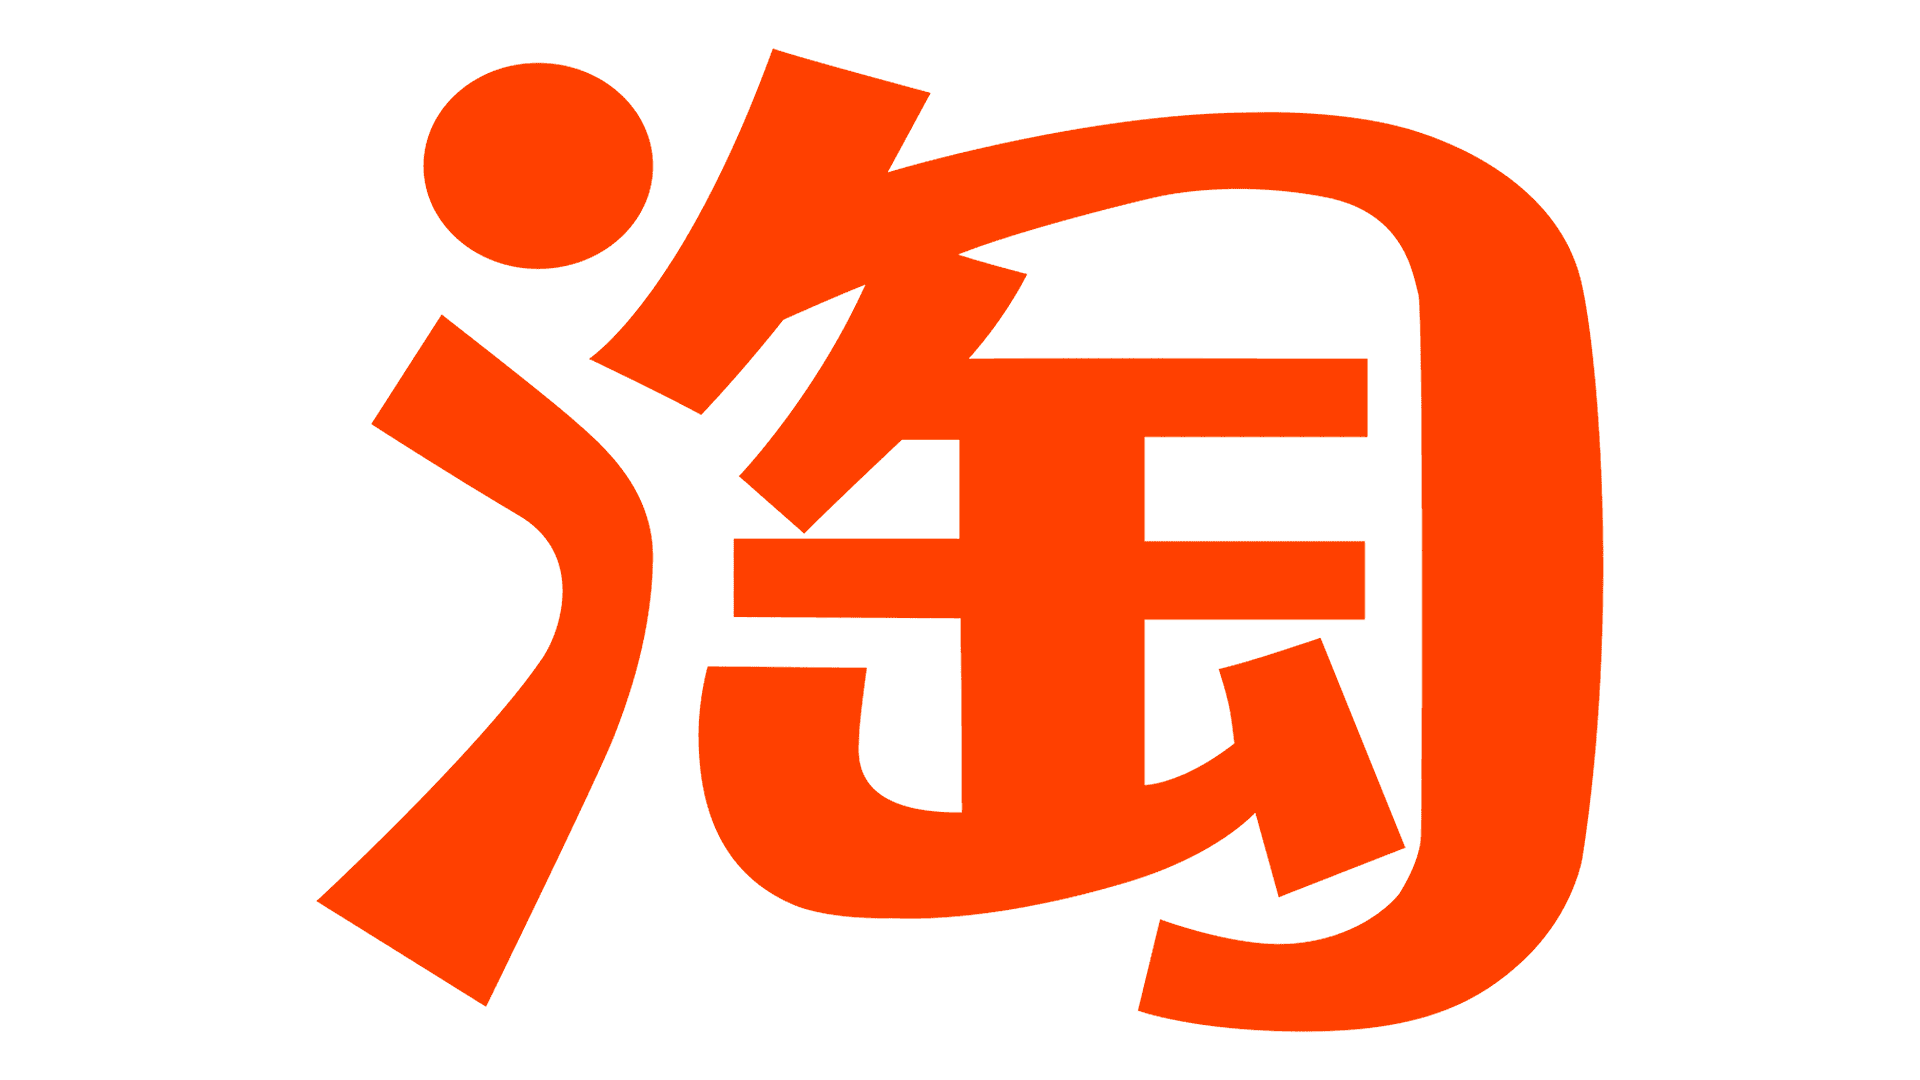 M taobao. Taobao логотип. Тао боа логотип. Taobao логотип без фона. Таобао значок приложения.